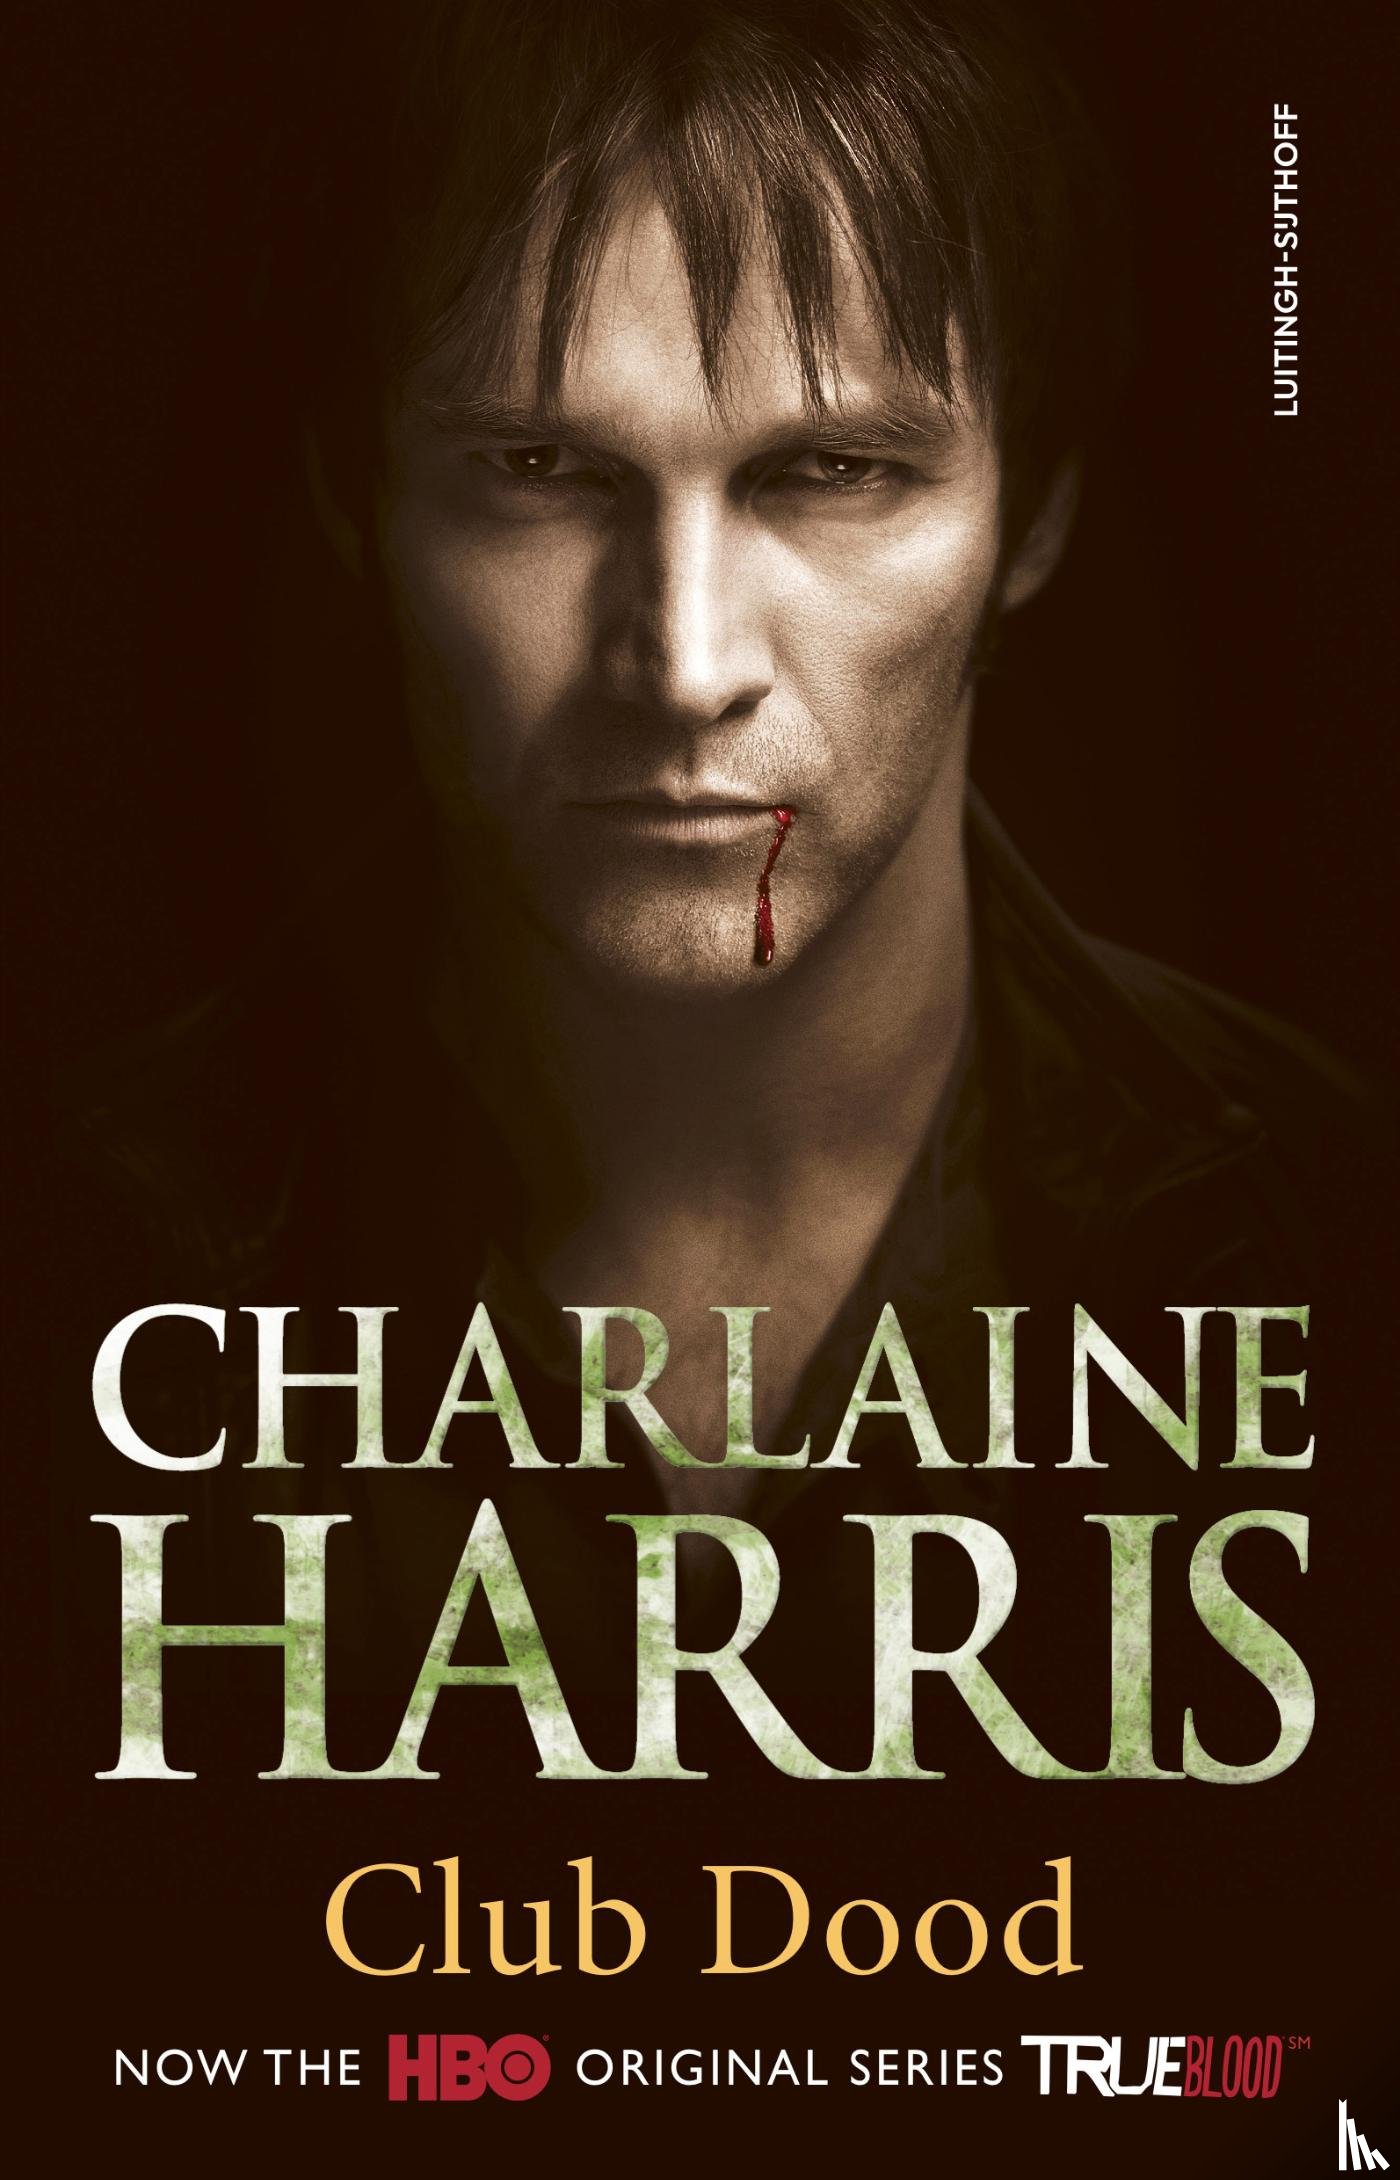 Harris, Charlaine - Club dood